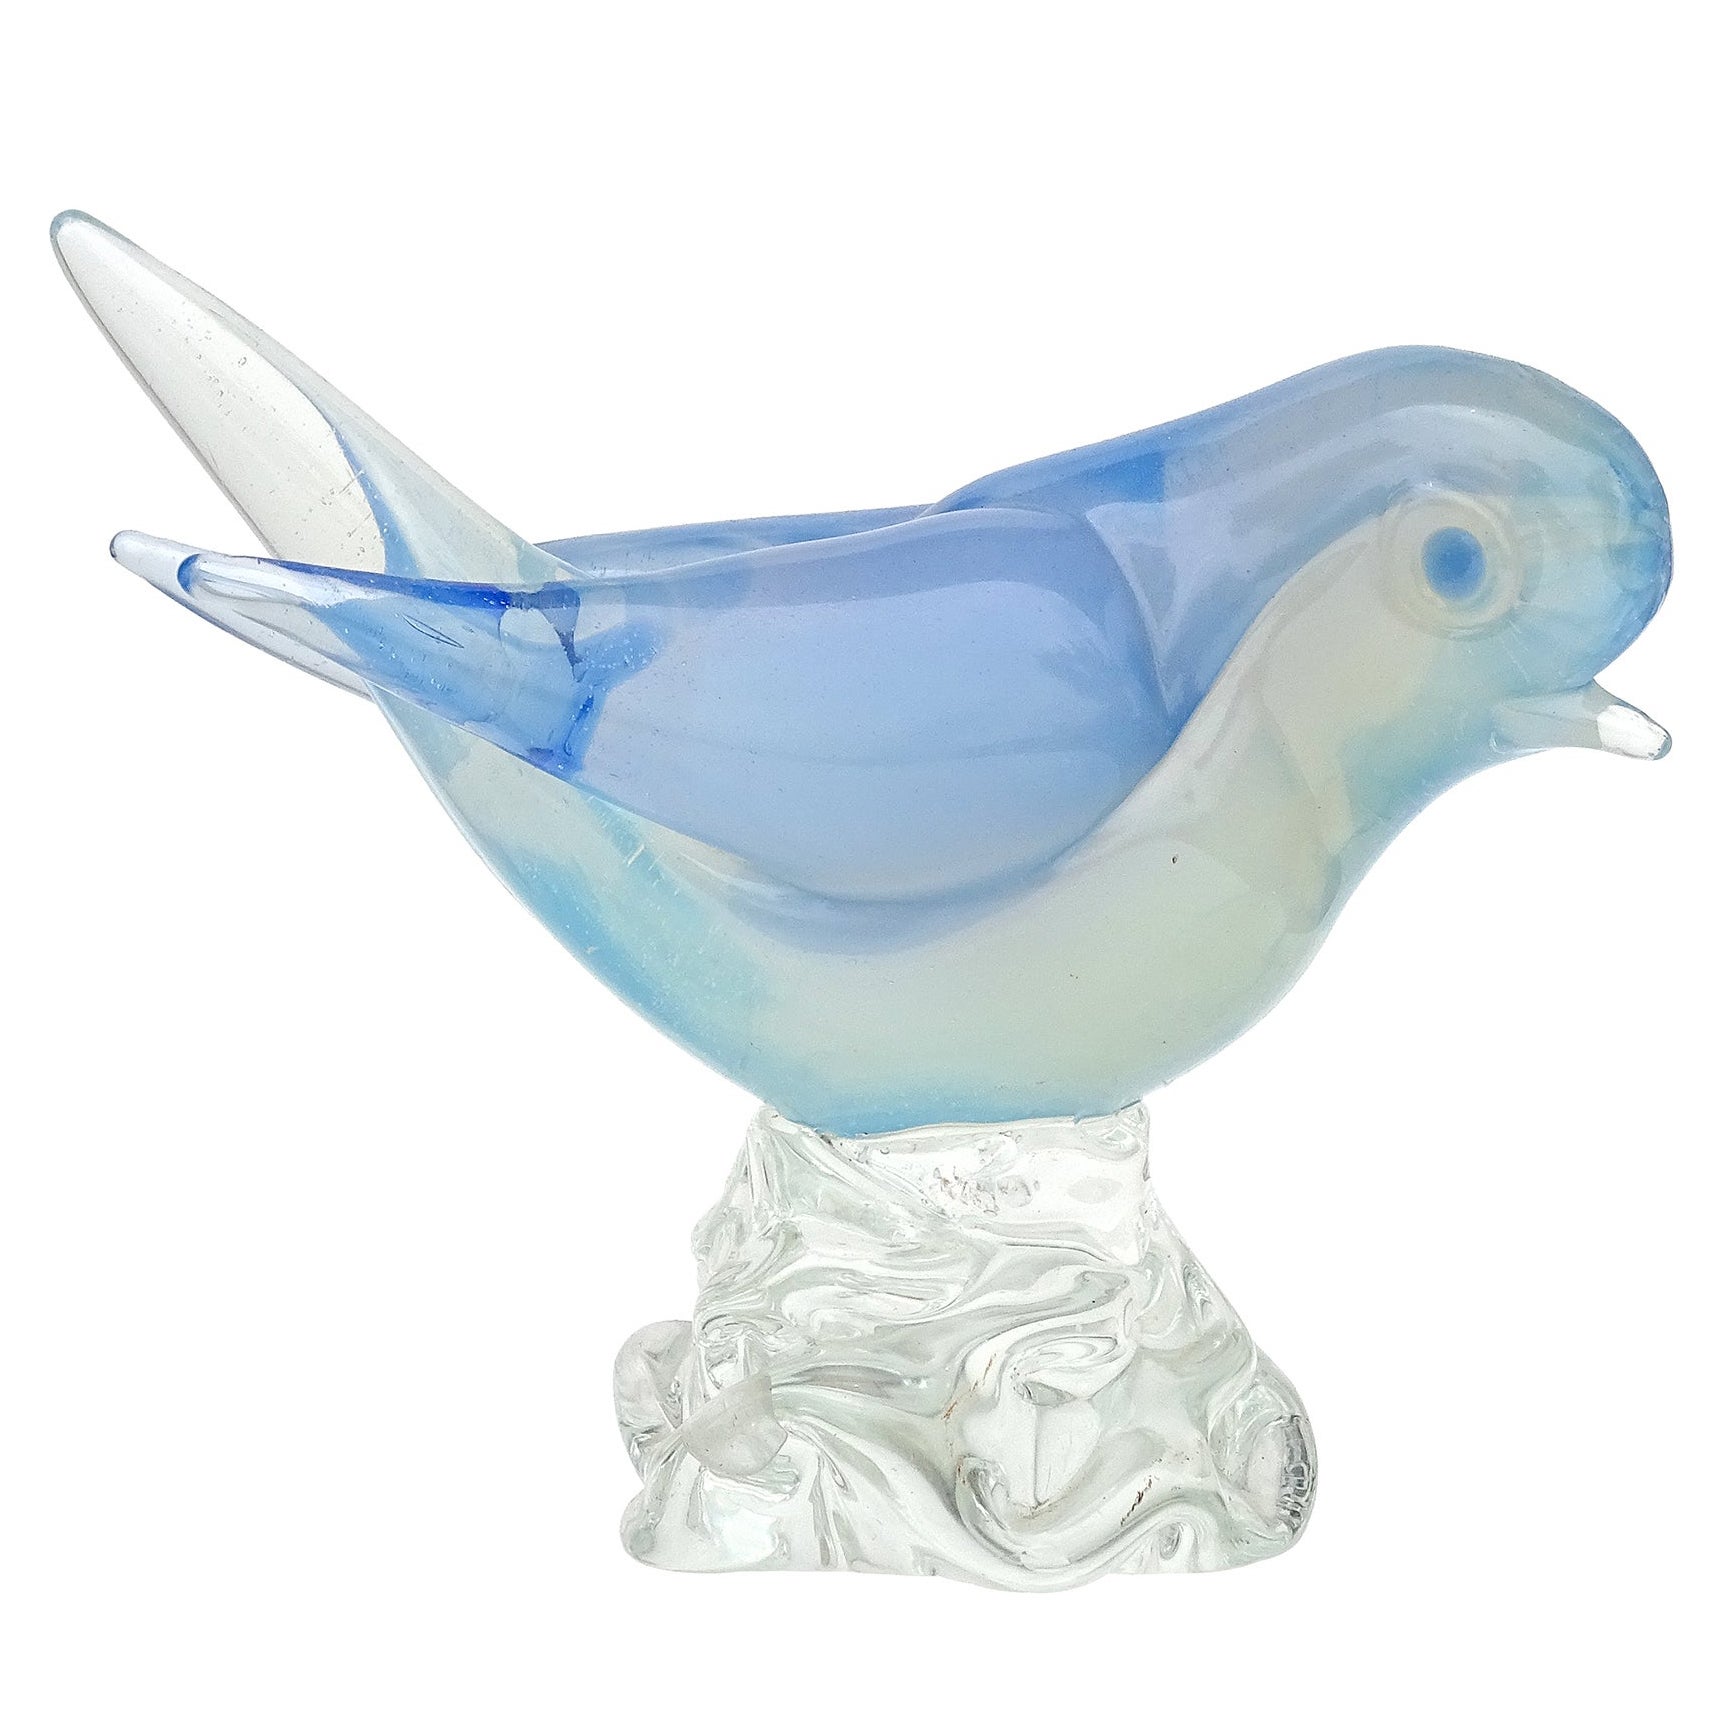 Figurine d'oiseau en verre d'art italien Seguso Vetri d'Arte Murano vintage opale blanche et bleue